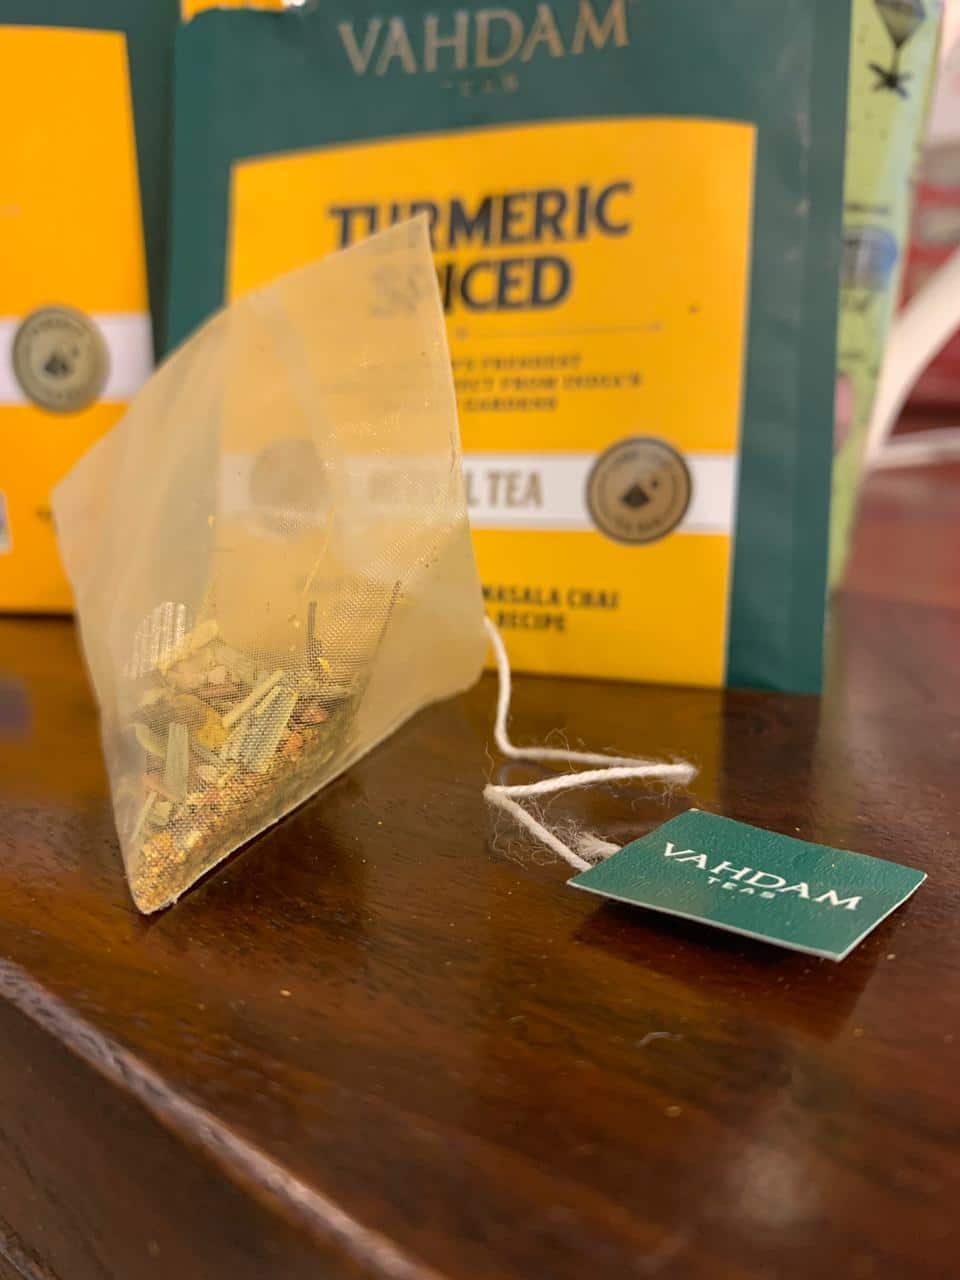 vahdam turmeric spiced tea bag packaging